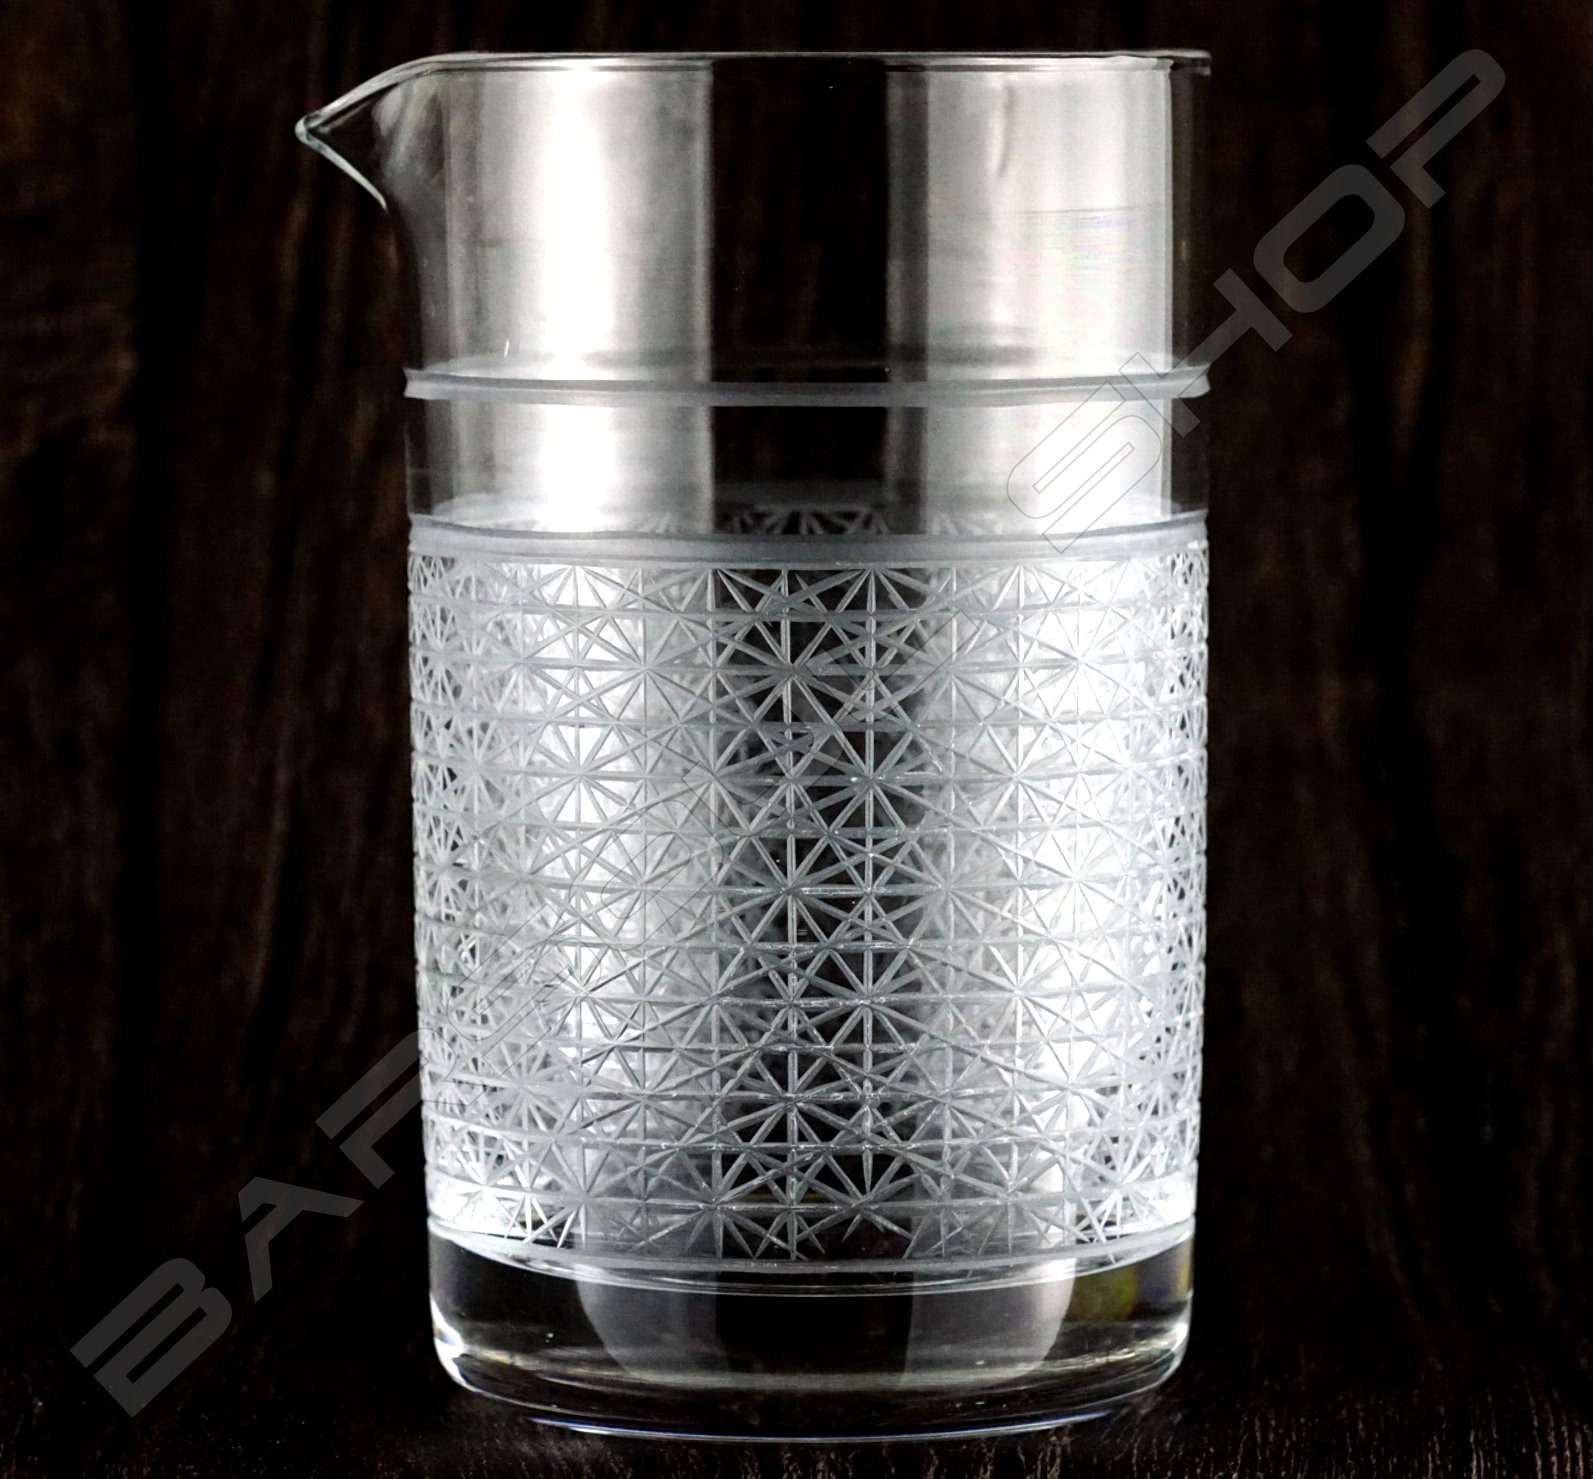 水晶攪拌杯 切子極致款630ml Crystal mixing glass (Extreme) H15cm